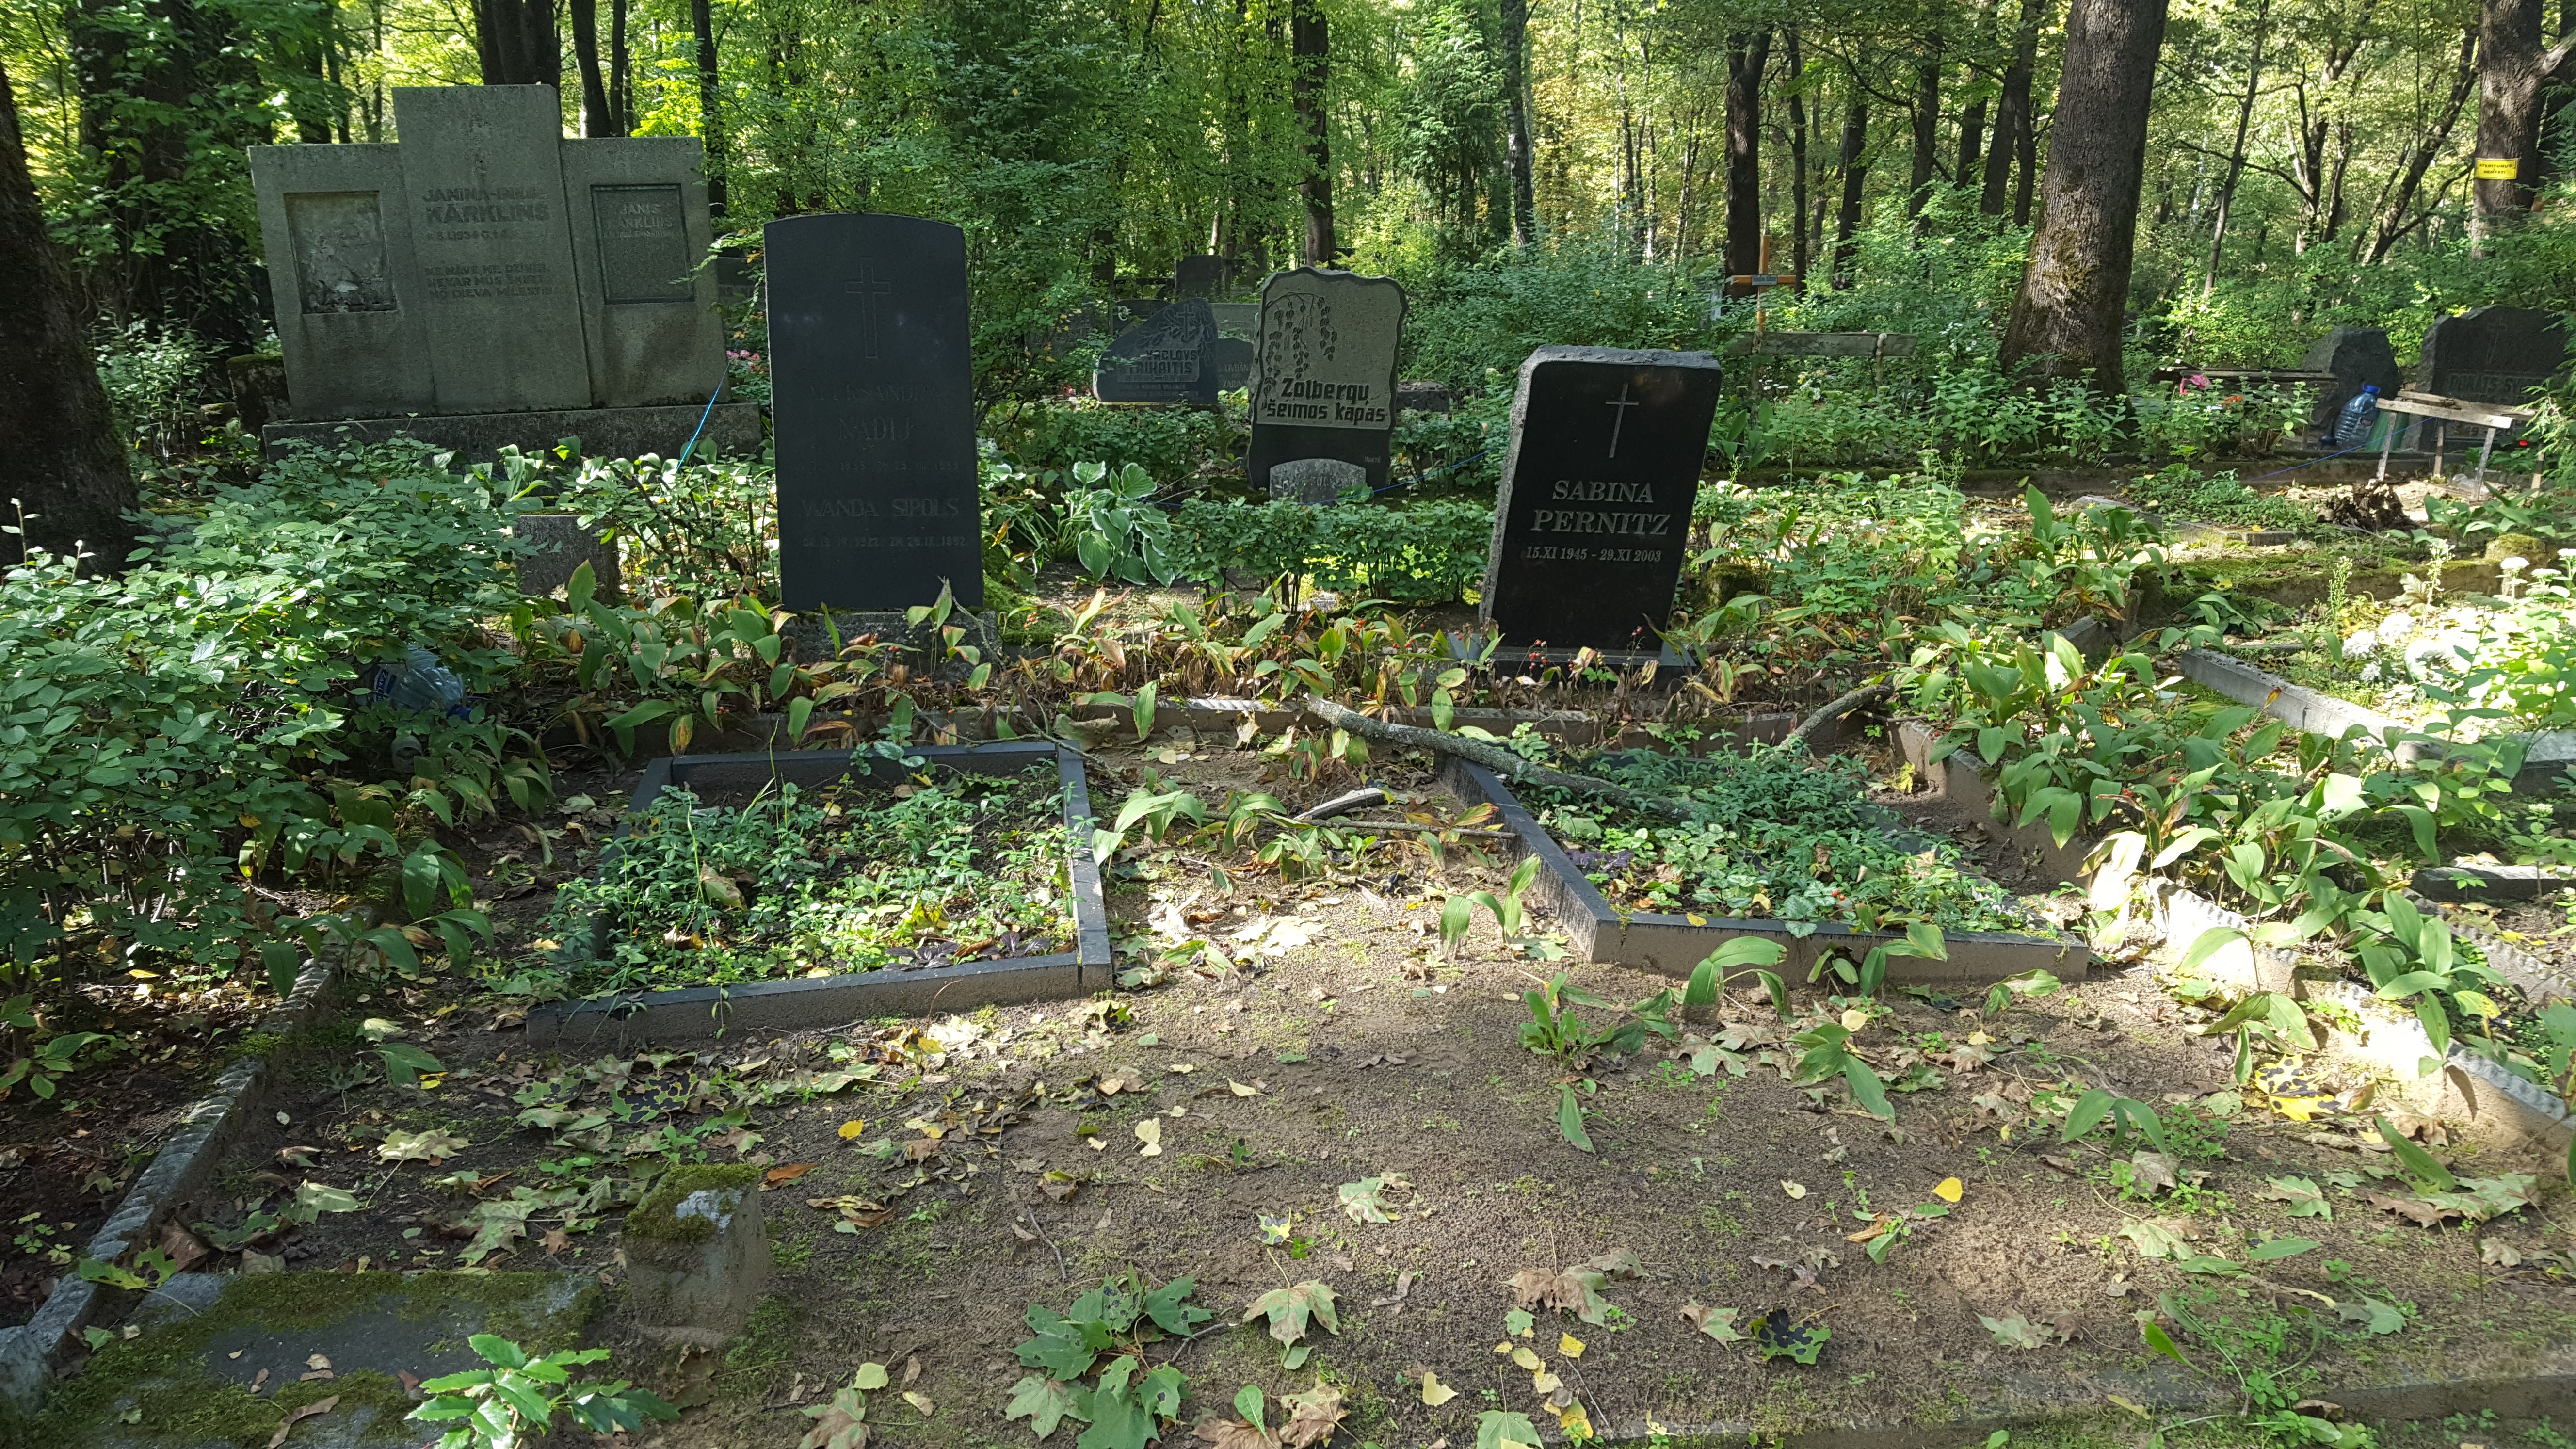 Tombstone of Alexandra Nadij and Wanda Sipols, St Michael's cemetery in Riga, as of 2021.